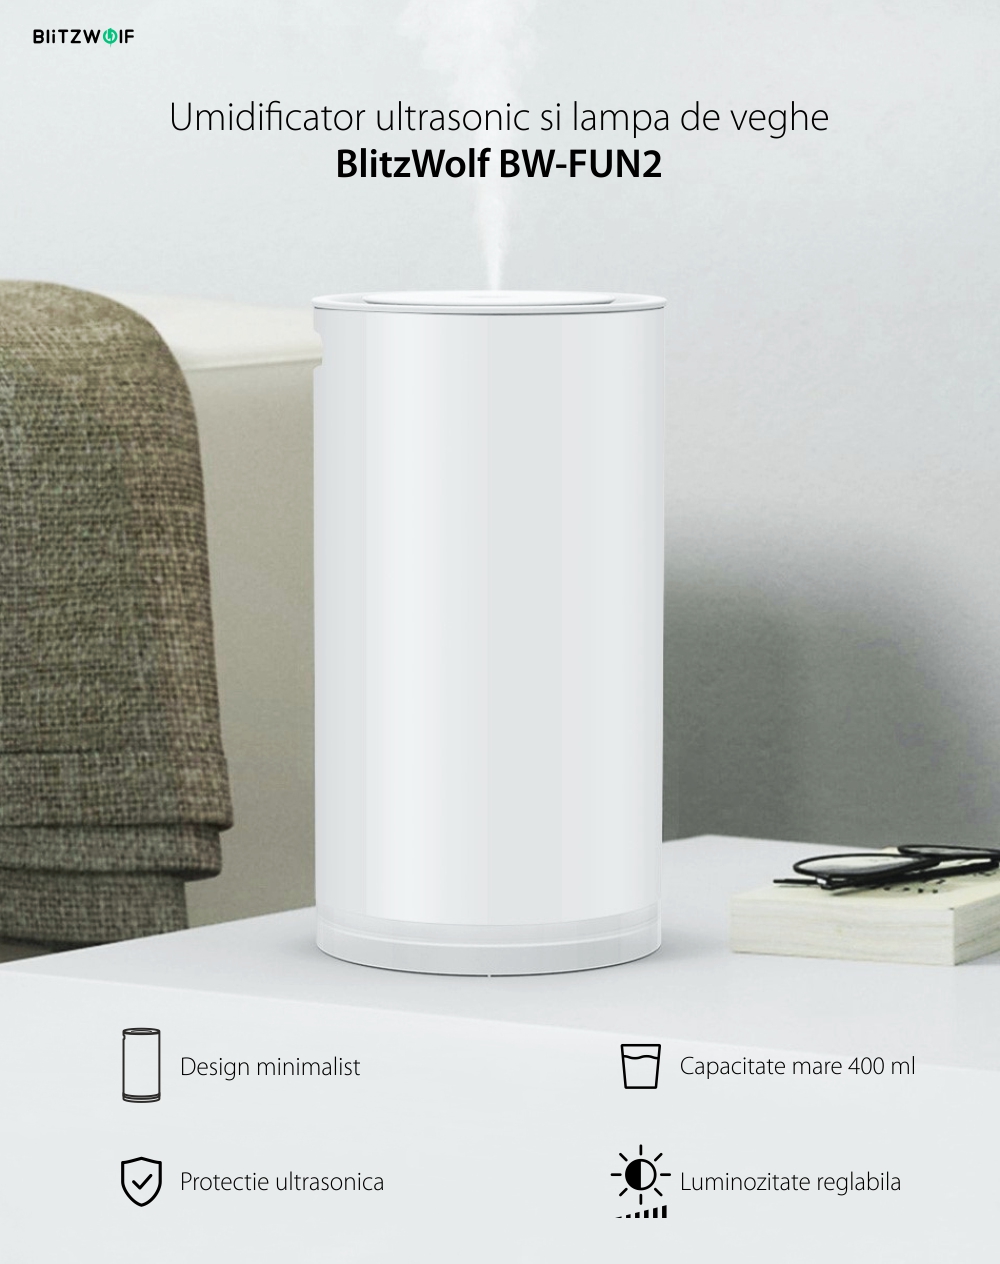 Umidificator ultrasonic cu lampa de veghe BlitzWolf BW-FUN2, Capacitate 400 mL, Luminozitate reglabila